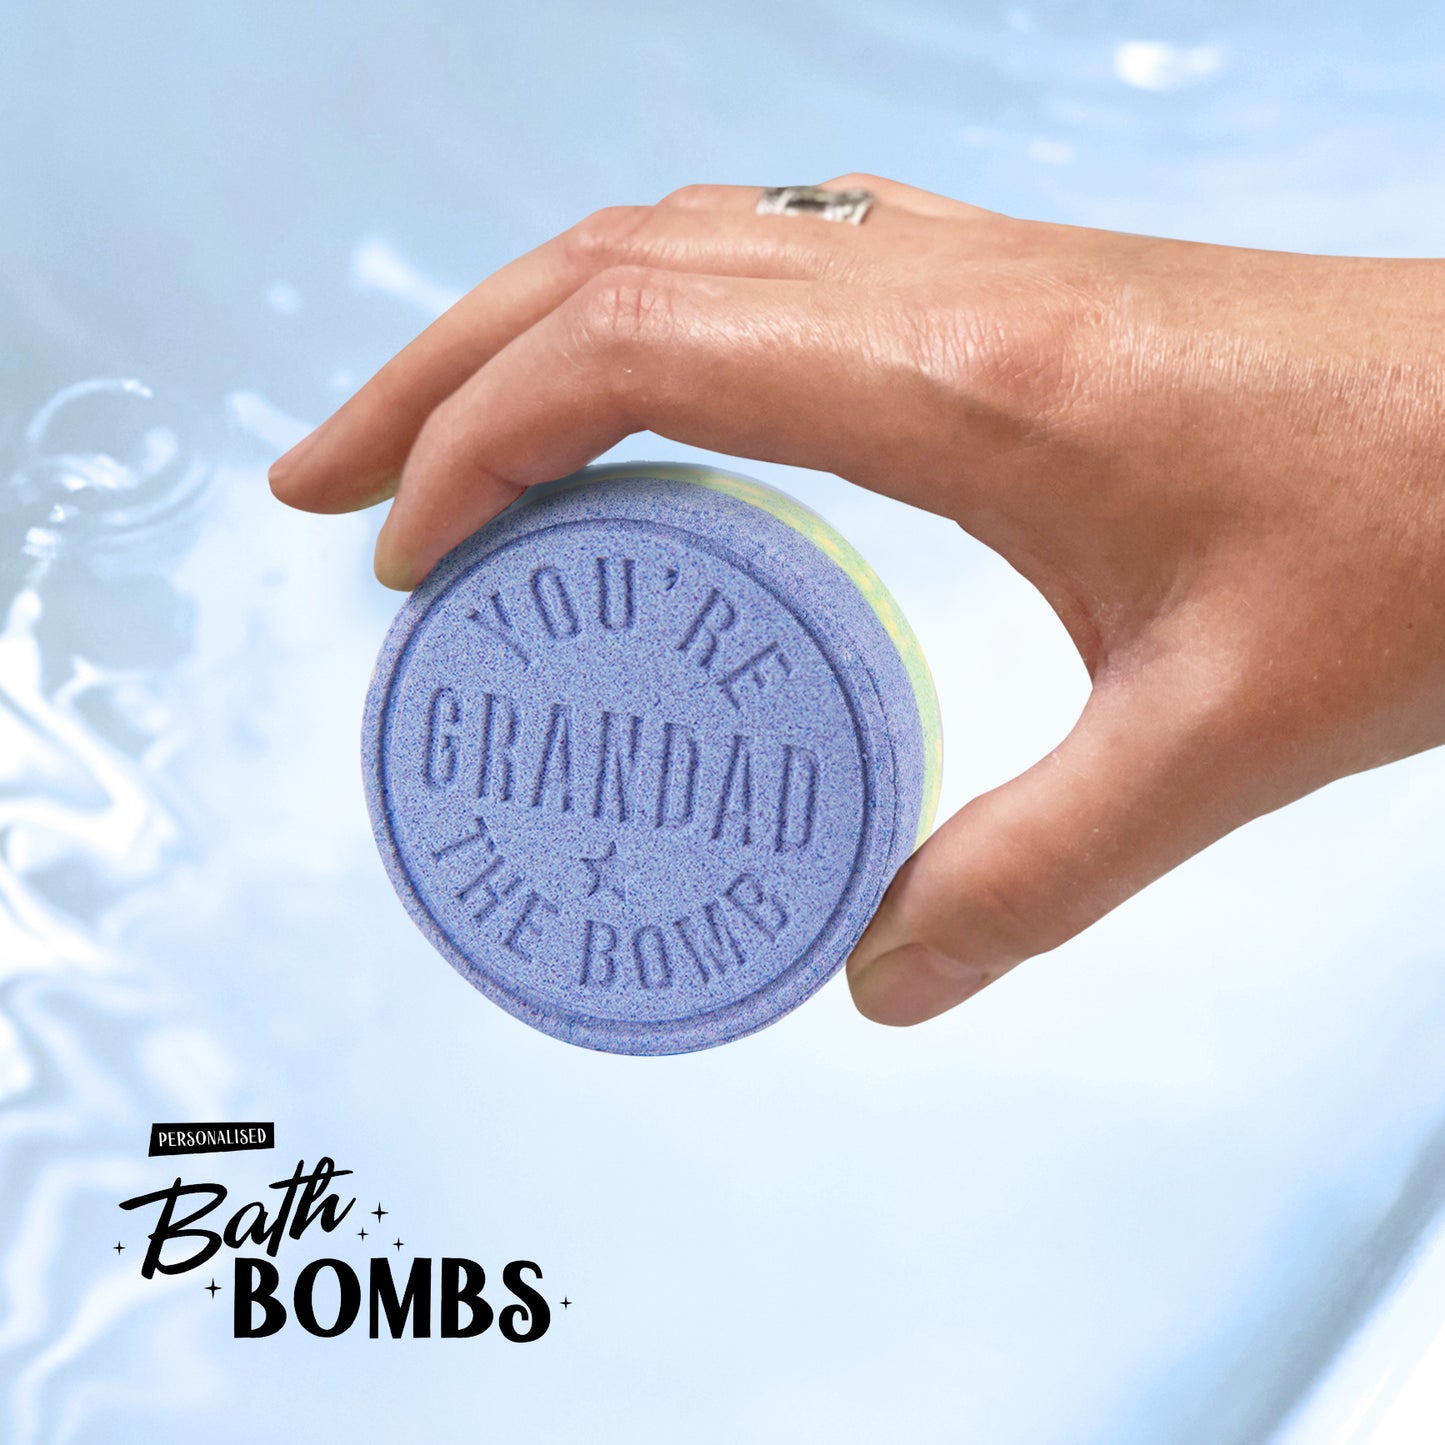 Personalised Special Grandad Citrus Fizz Scented Bath Bomb